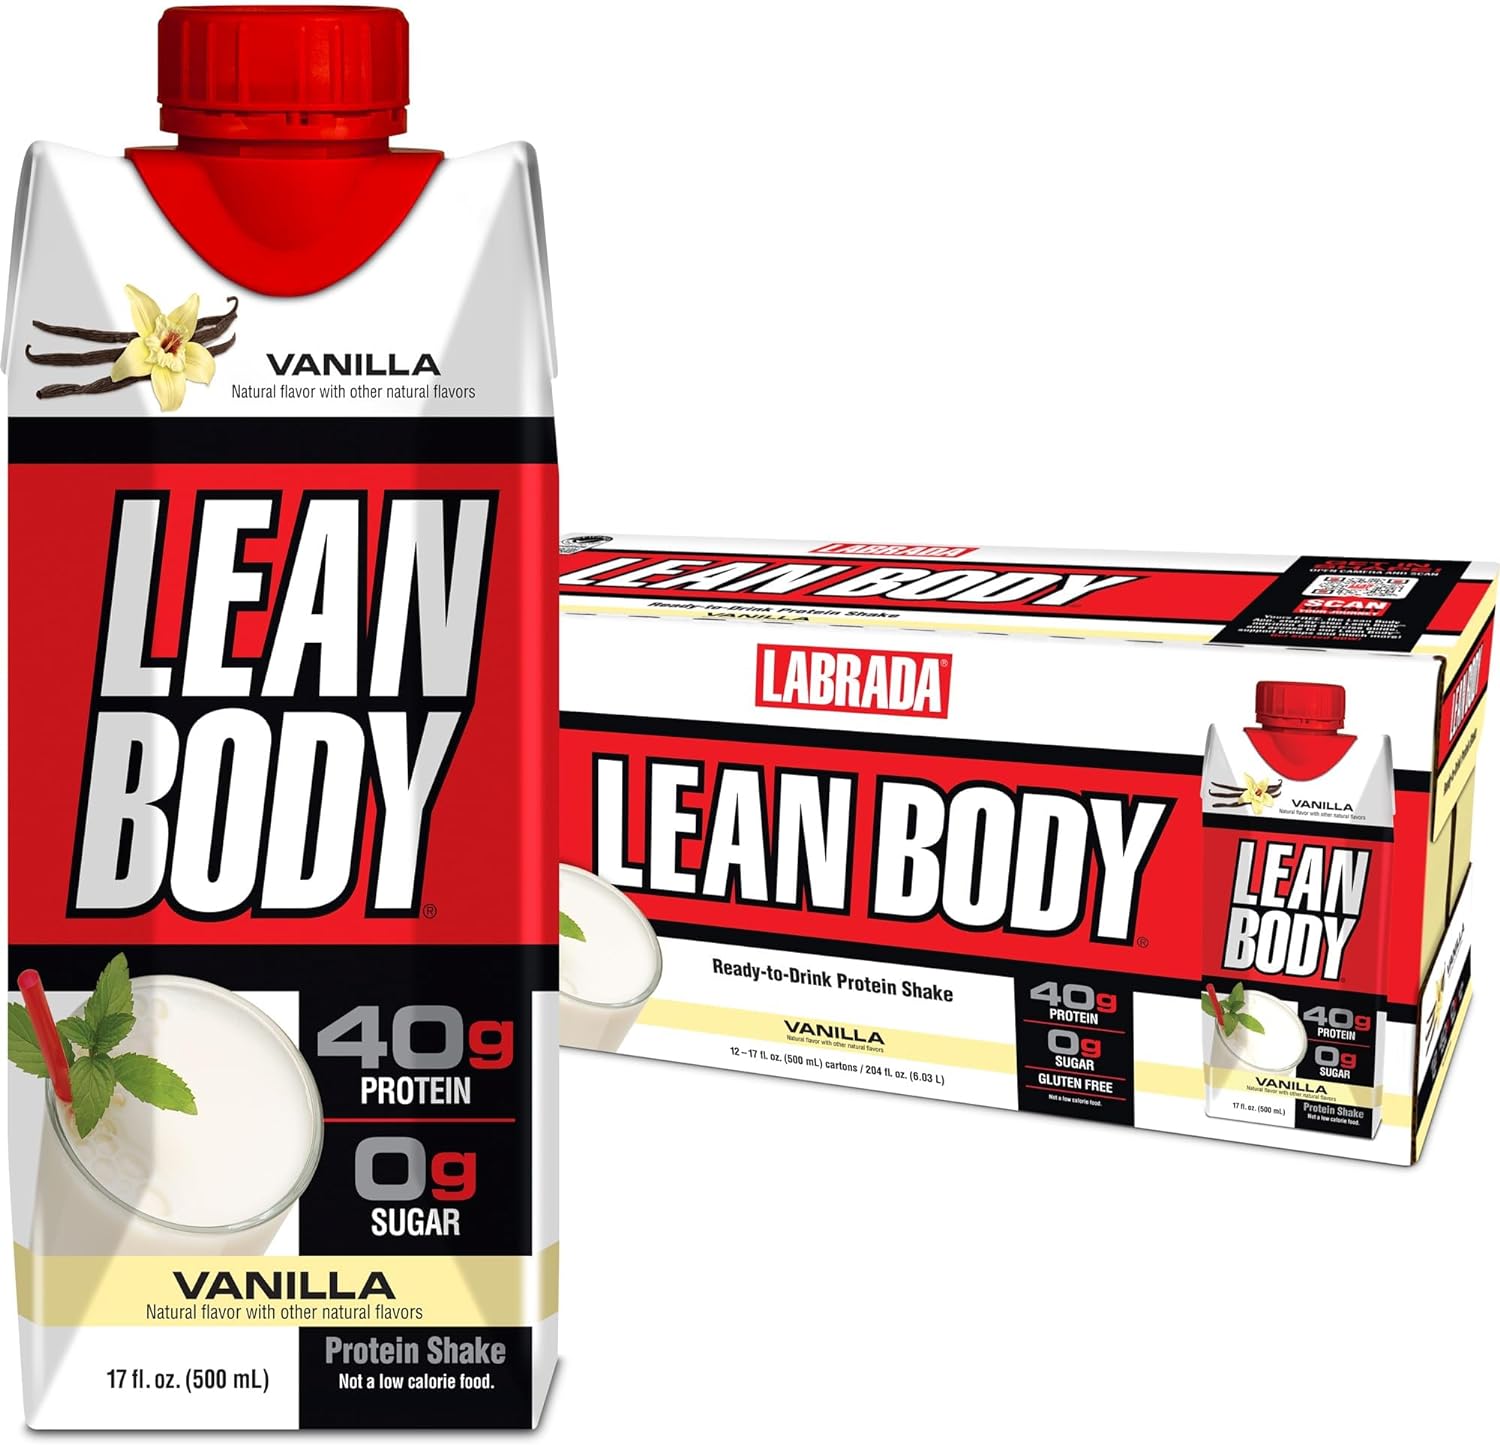 Lean Body Protein Drink 40g (12CT)